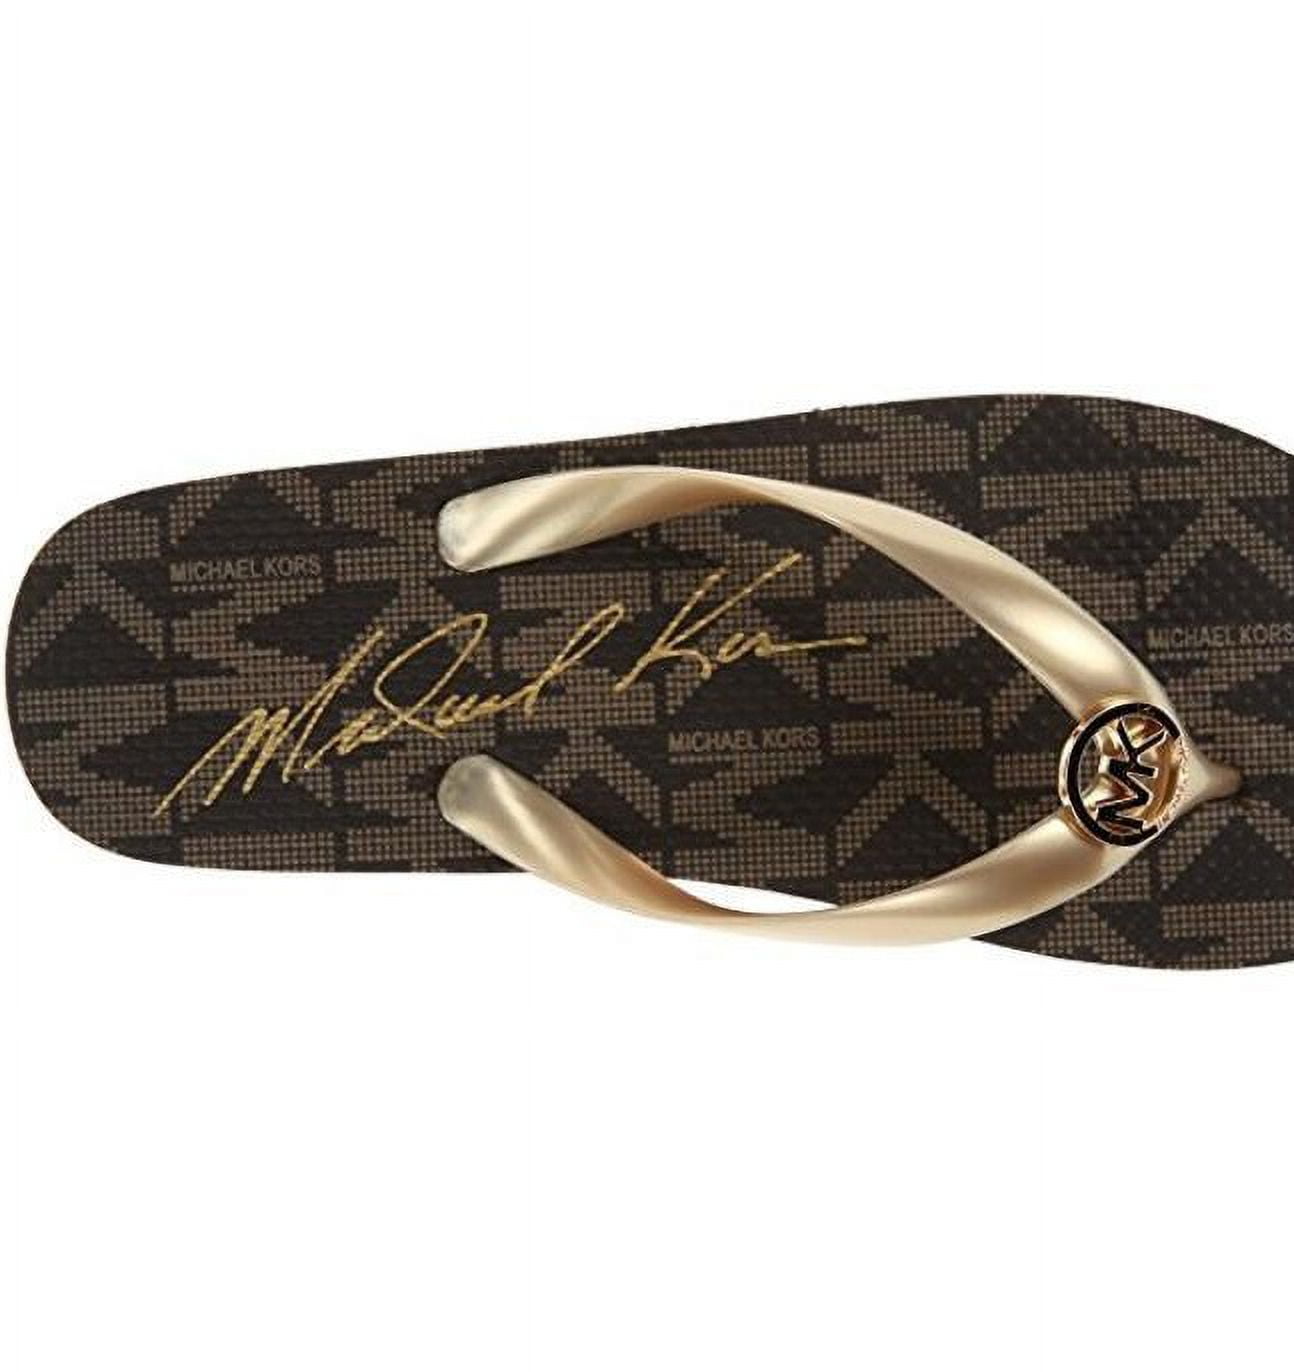 Michael Kors Jet Set PVC Logo Women's Designer Flip Flops Sandals NEW  Retail $45